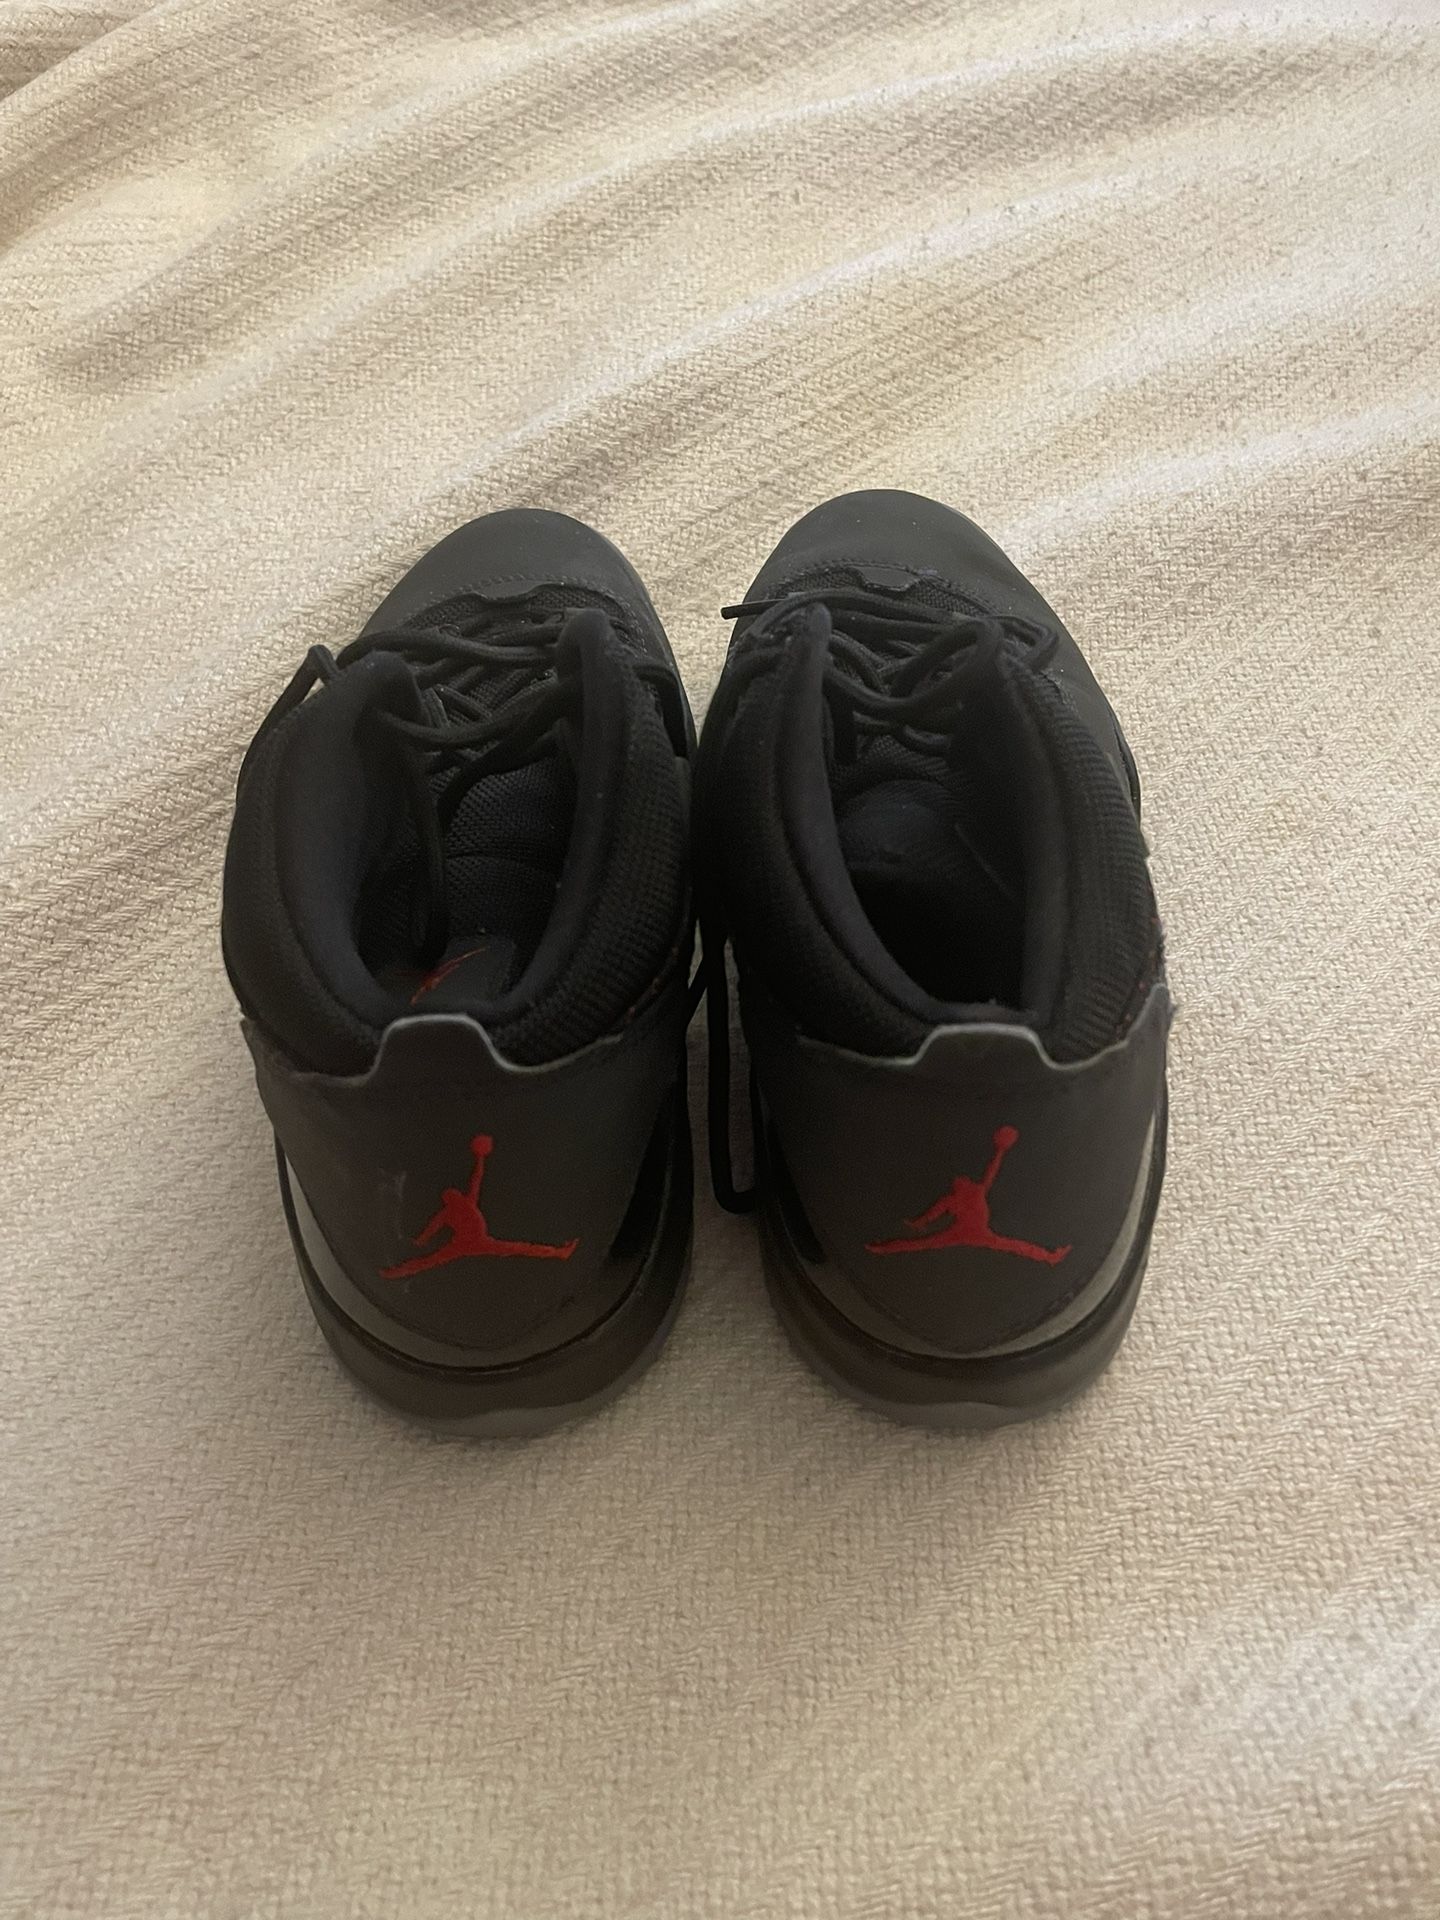 Nike Youth Air Jordans Black Size 4Y